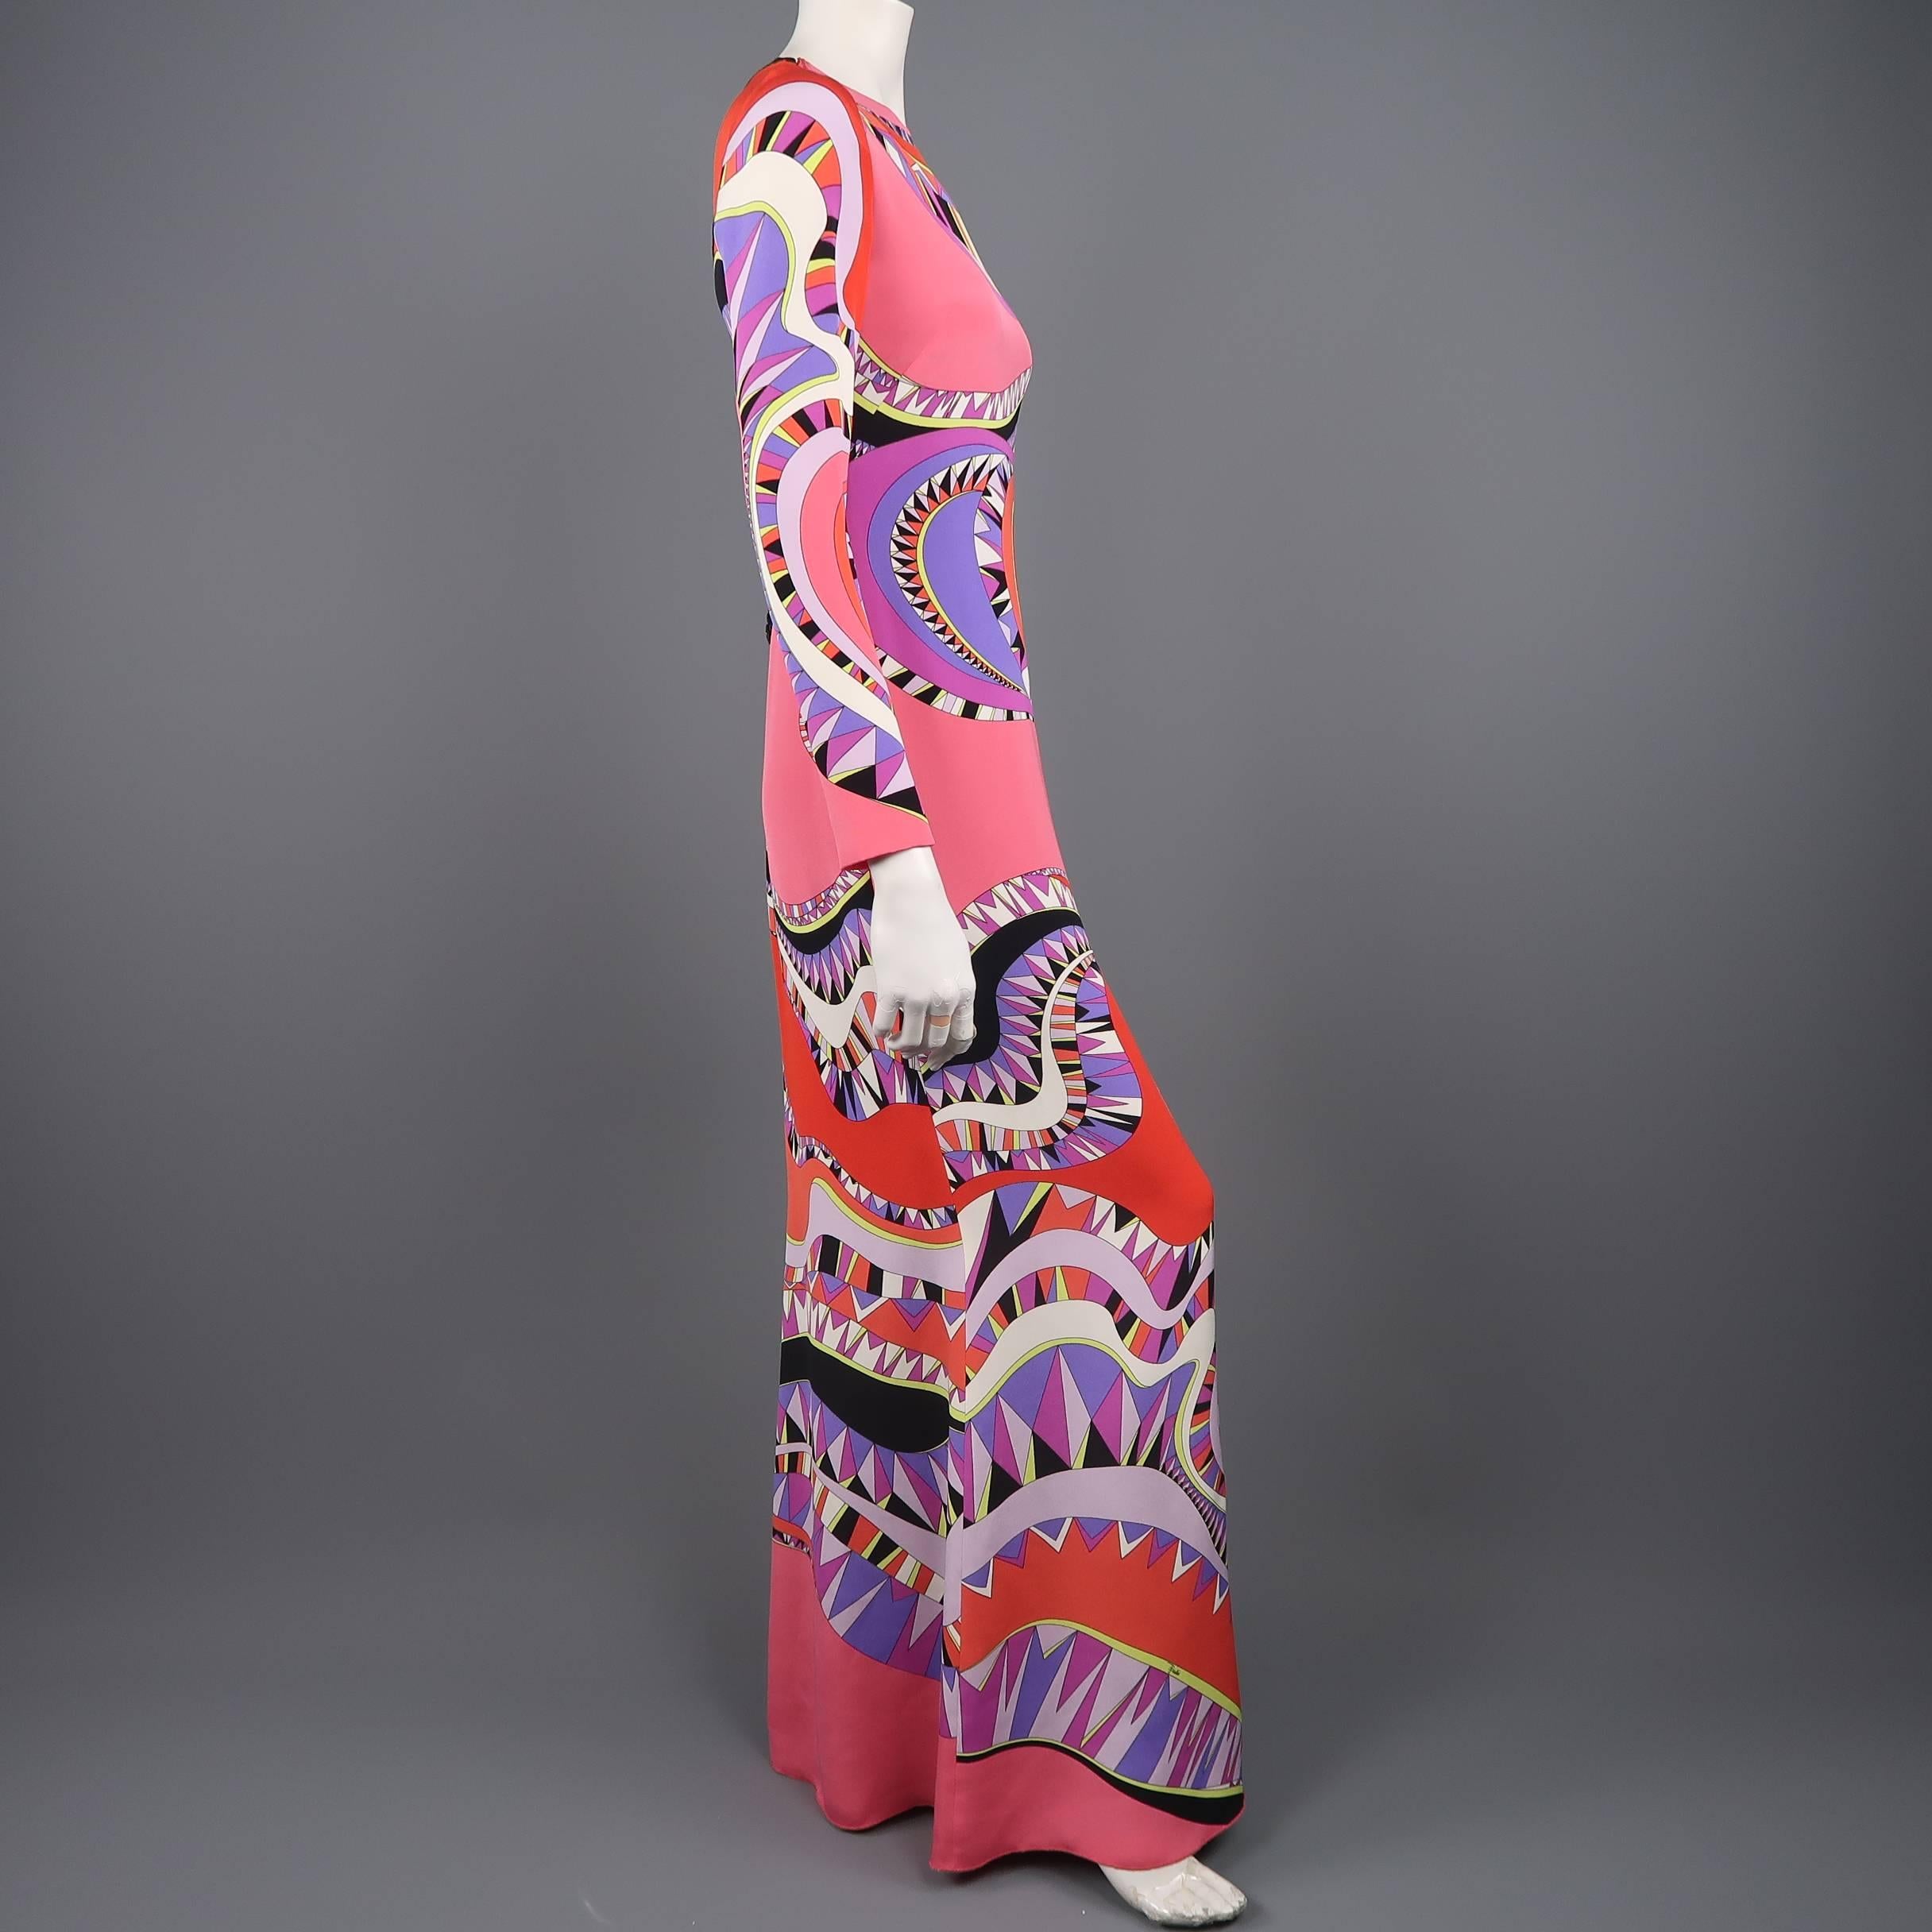 EMILIO PUCCI Dress - Pre-Fall 2015 Runway - Pink & Red Print Column Gown 1